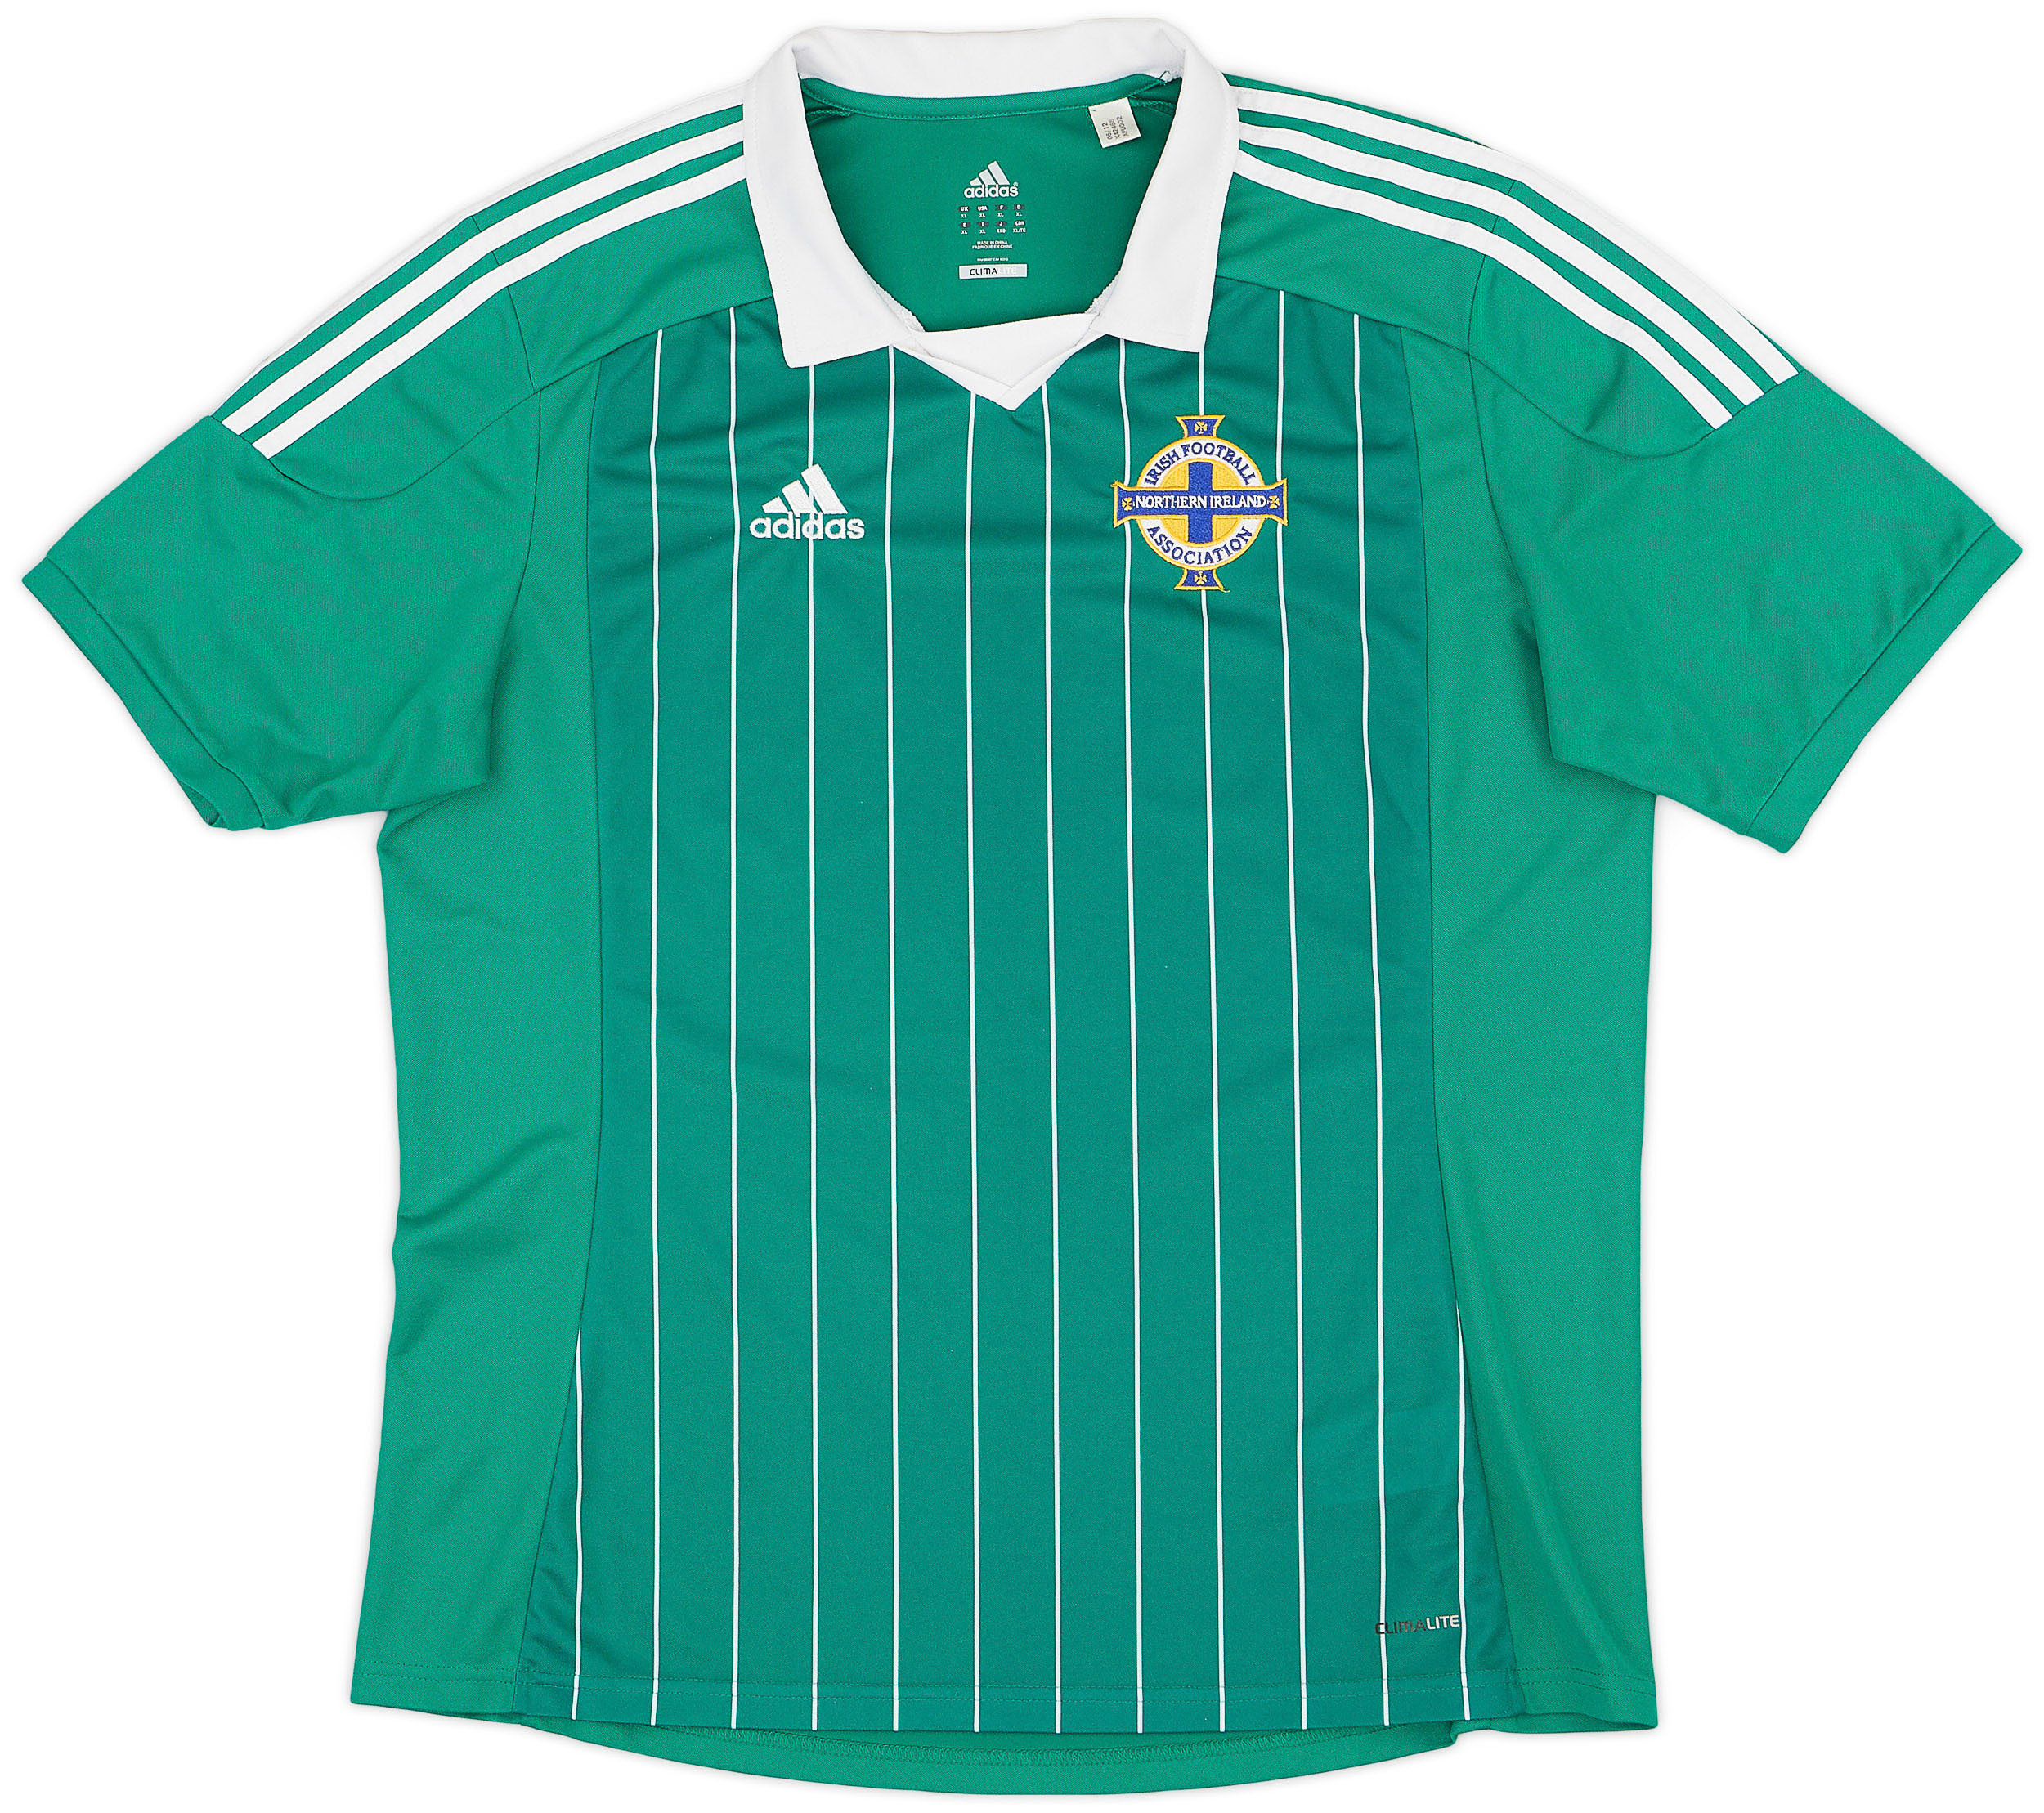 2012-13 Northern Ireland Home Shirt - 9/10 - ()